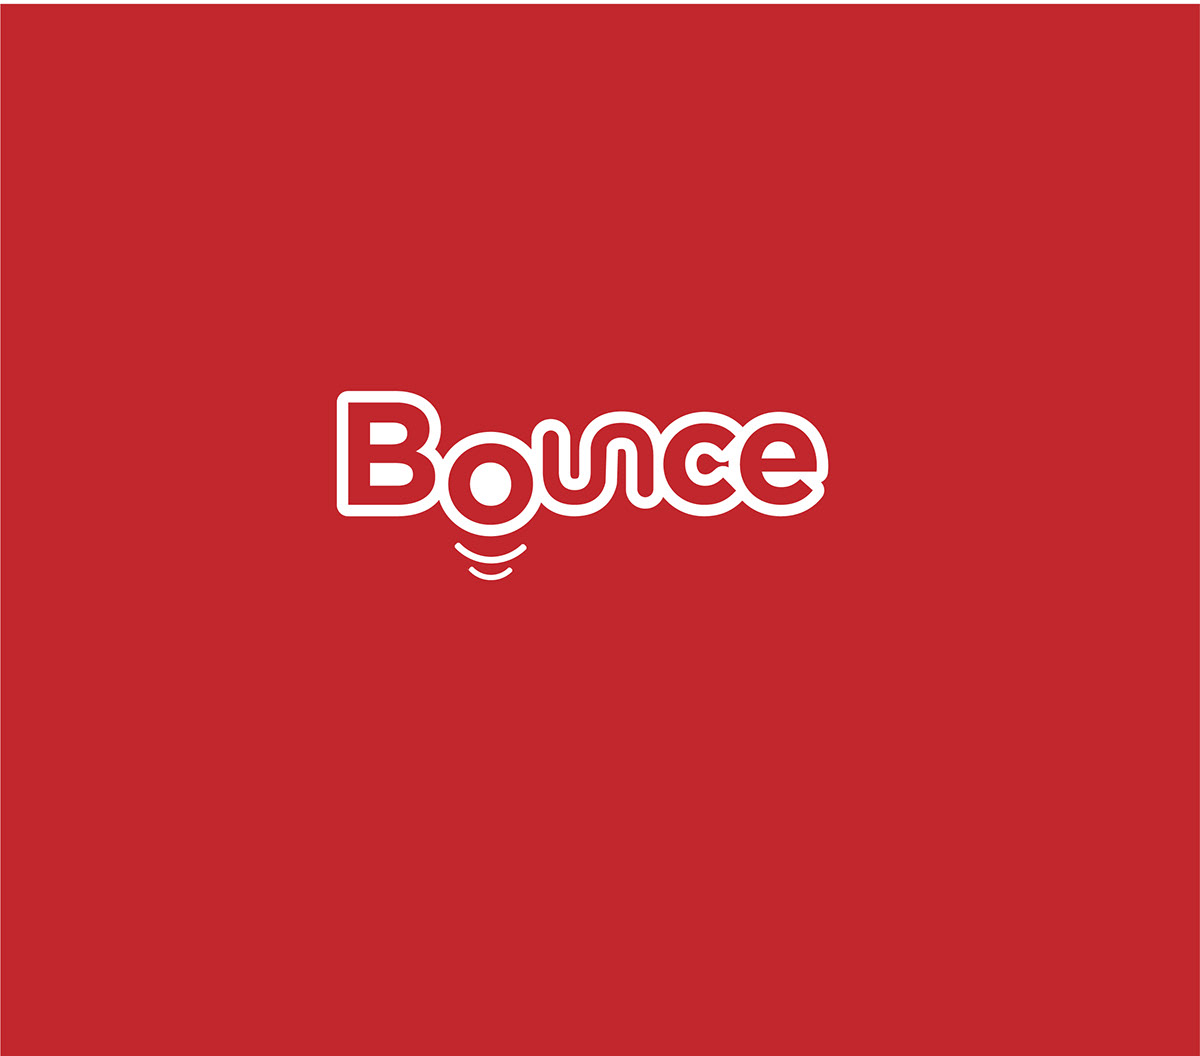 Bounce on Behance